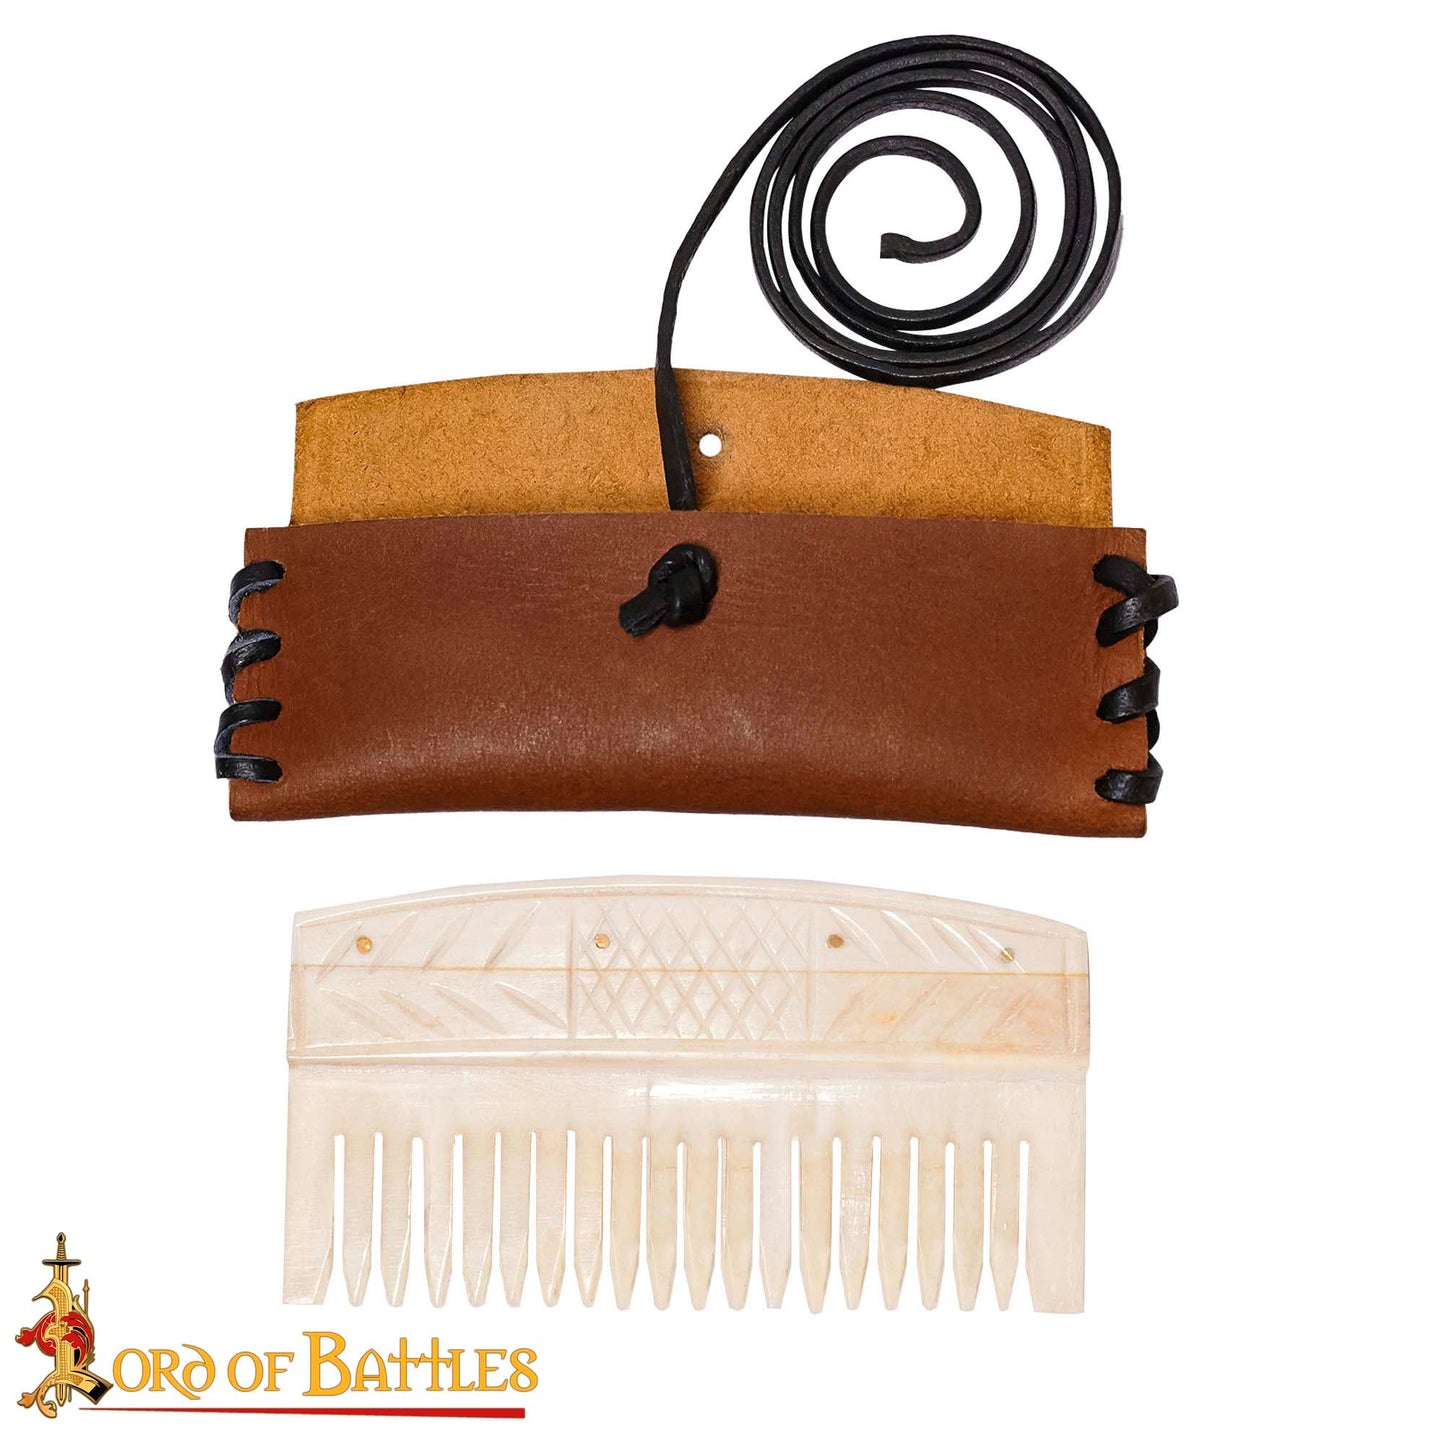 Replica Viking Bone Comb with a leather case